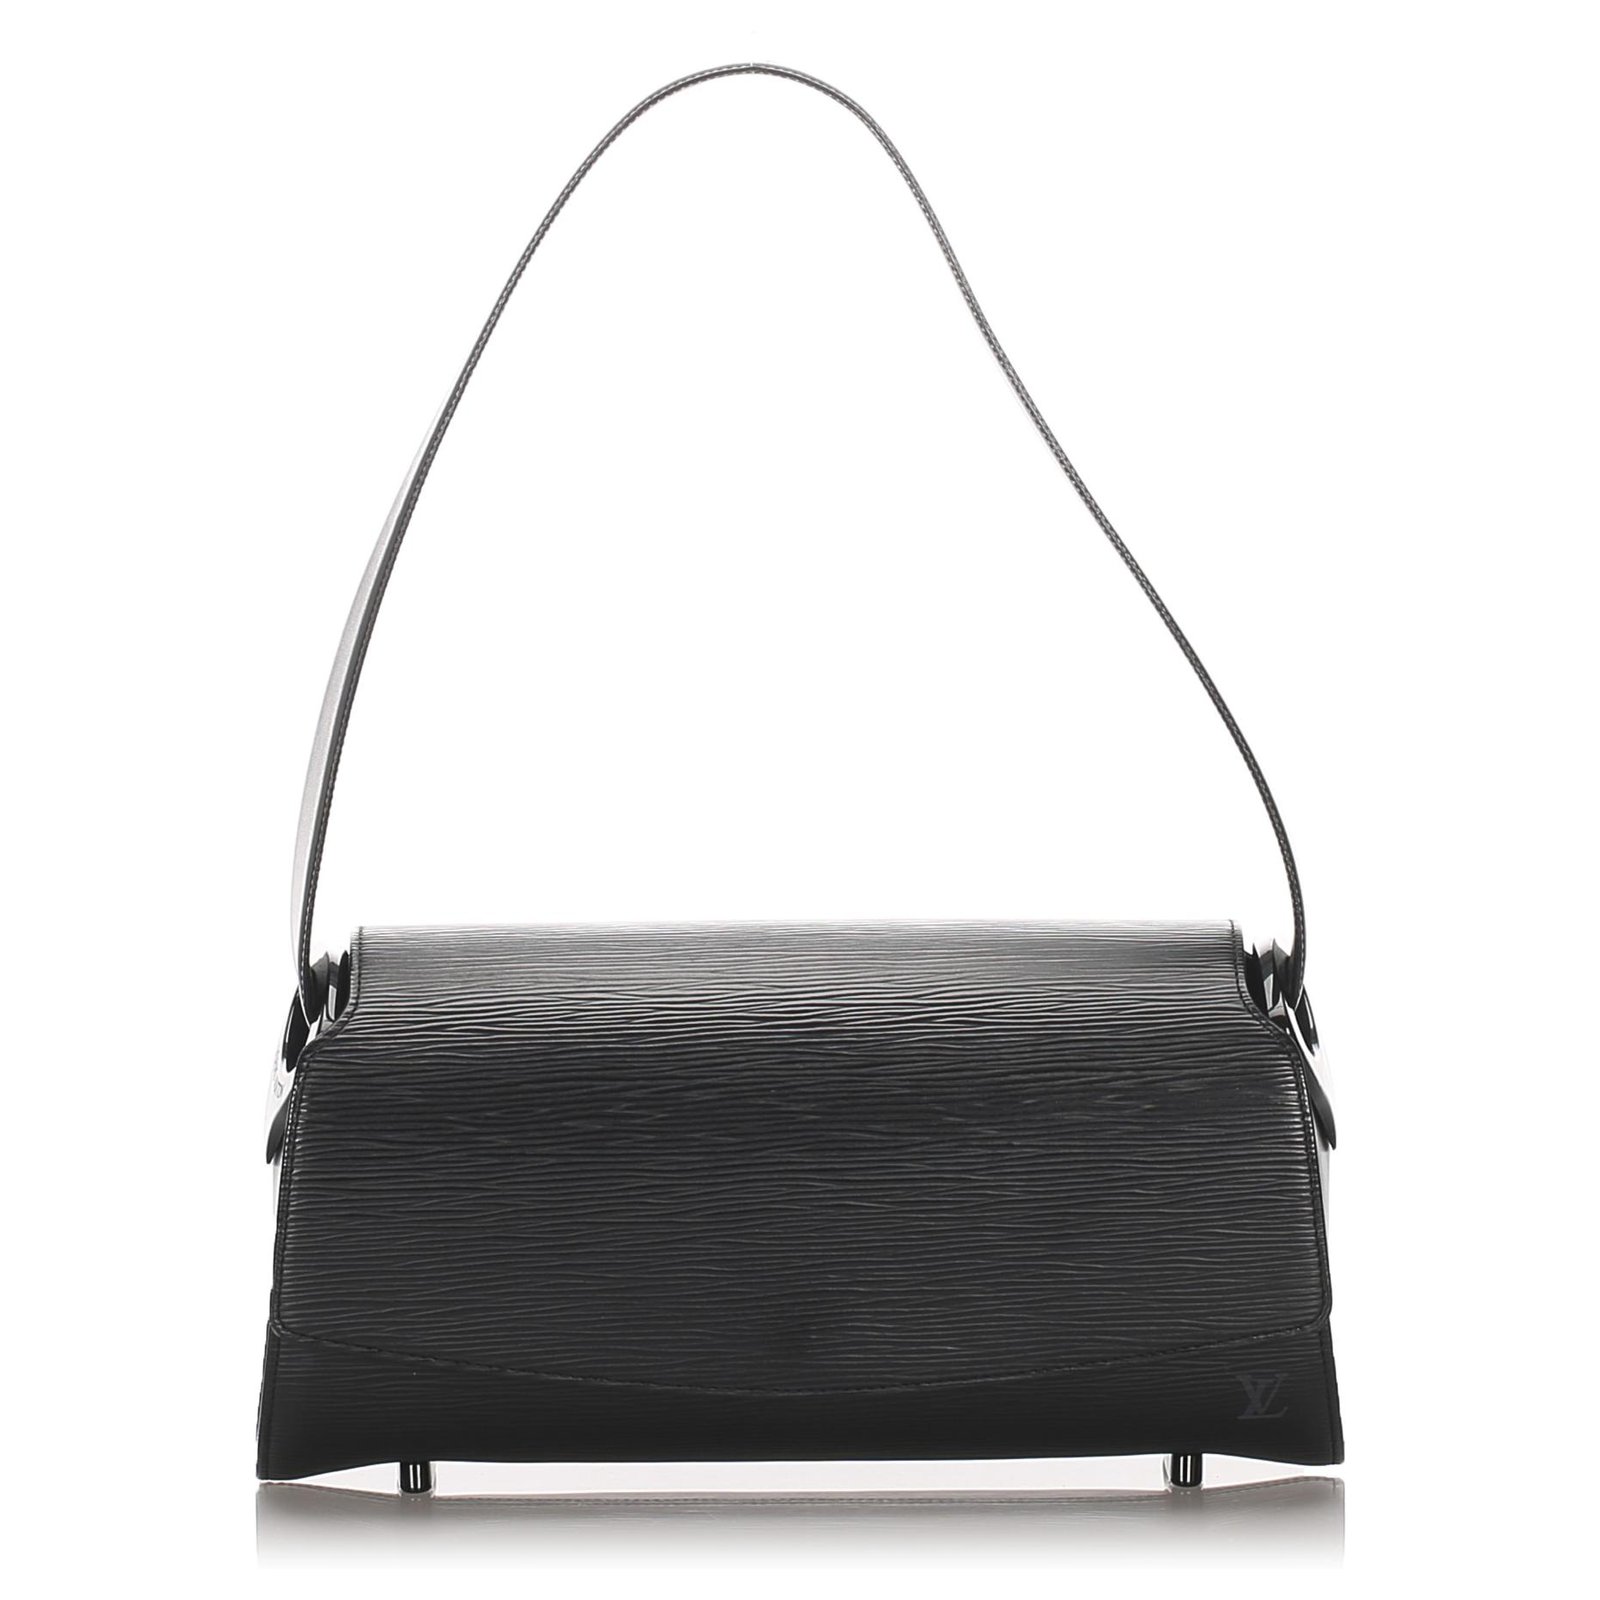 Louis Vuitton Nocturne Handbag in Black Epi Leather - Handbags